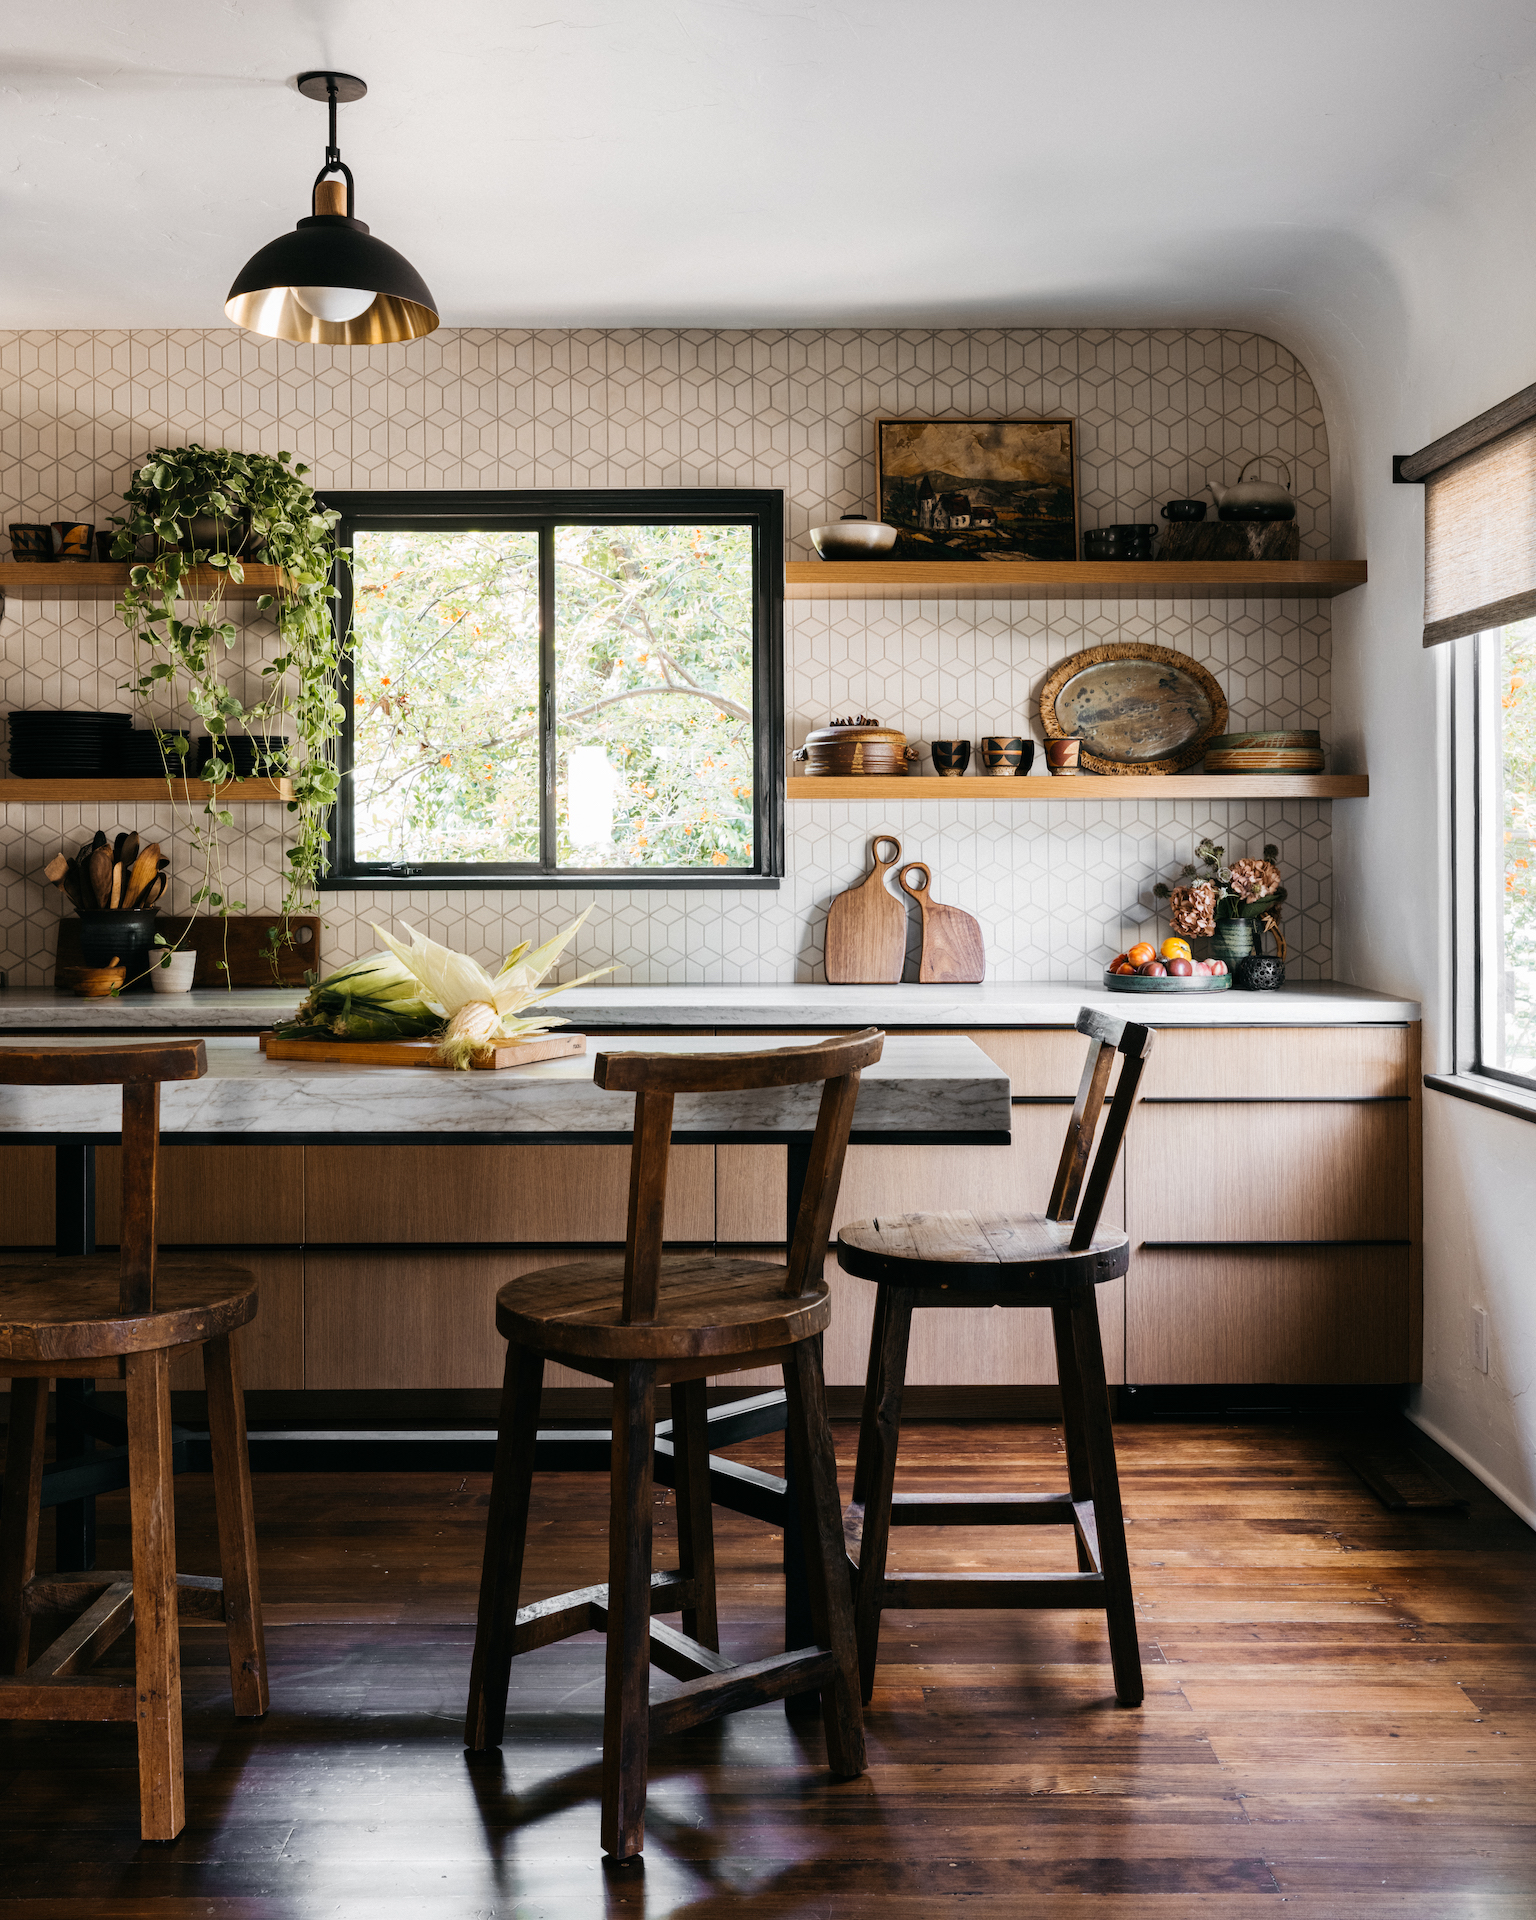 Greg and Christy Billock aesthetic kitchen.